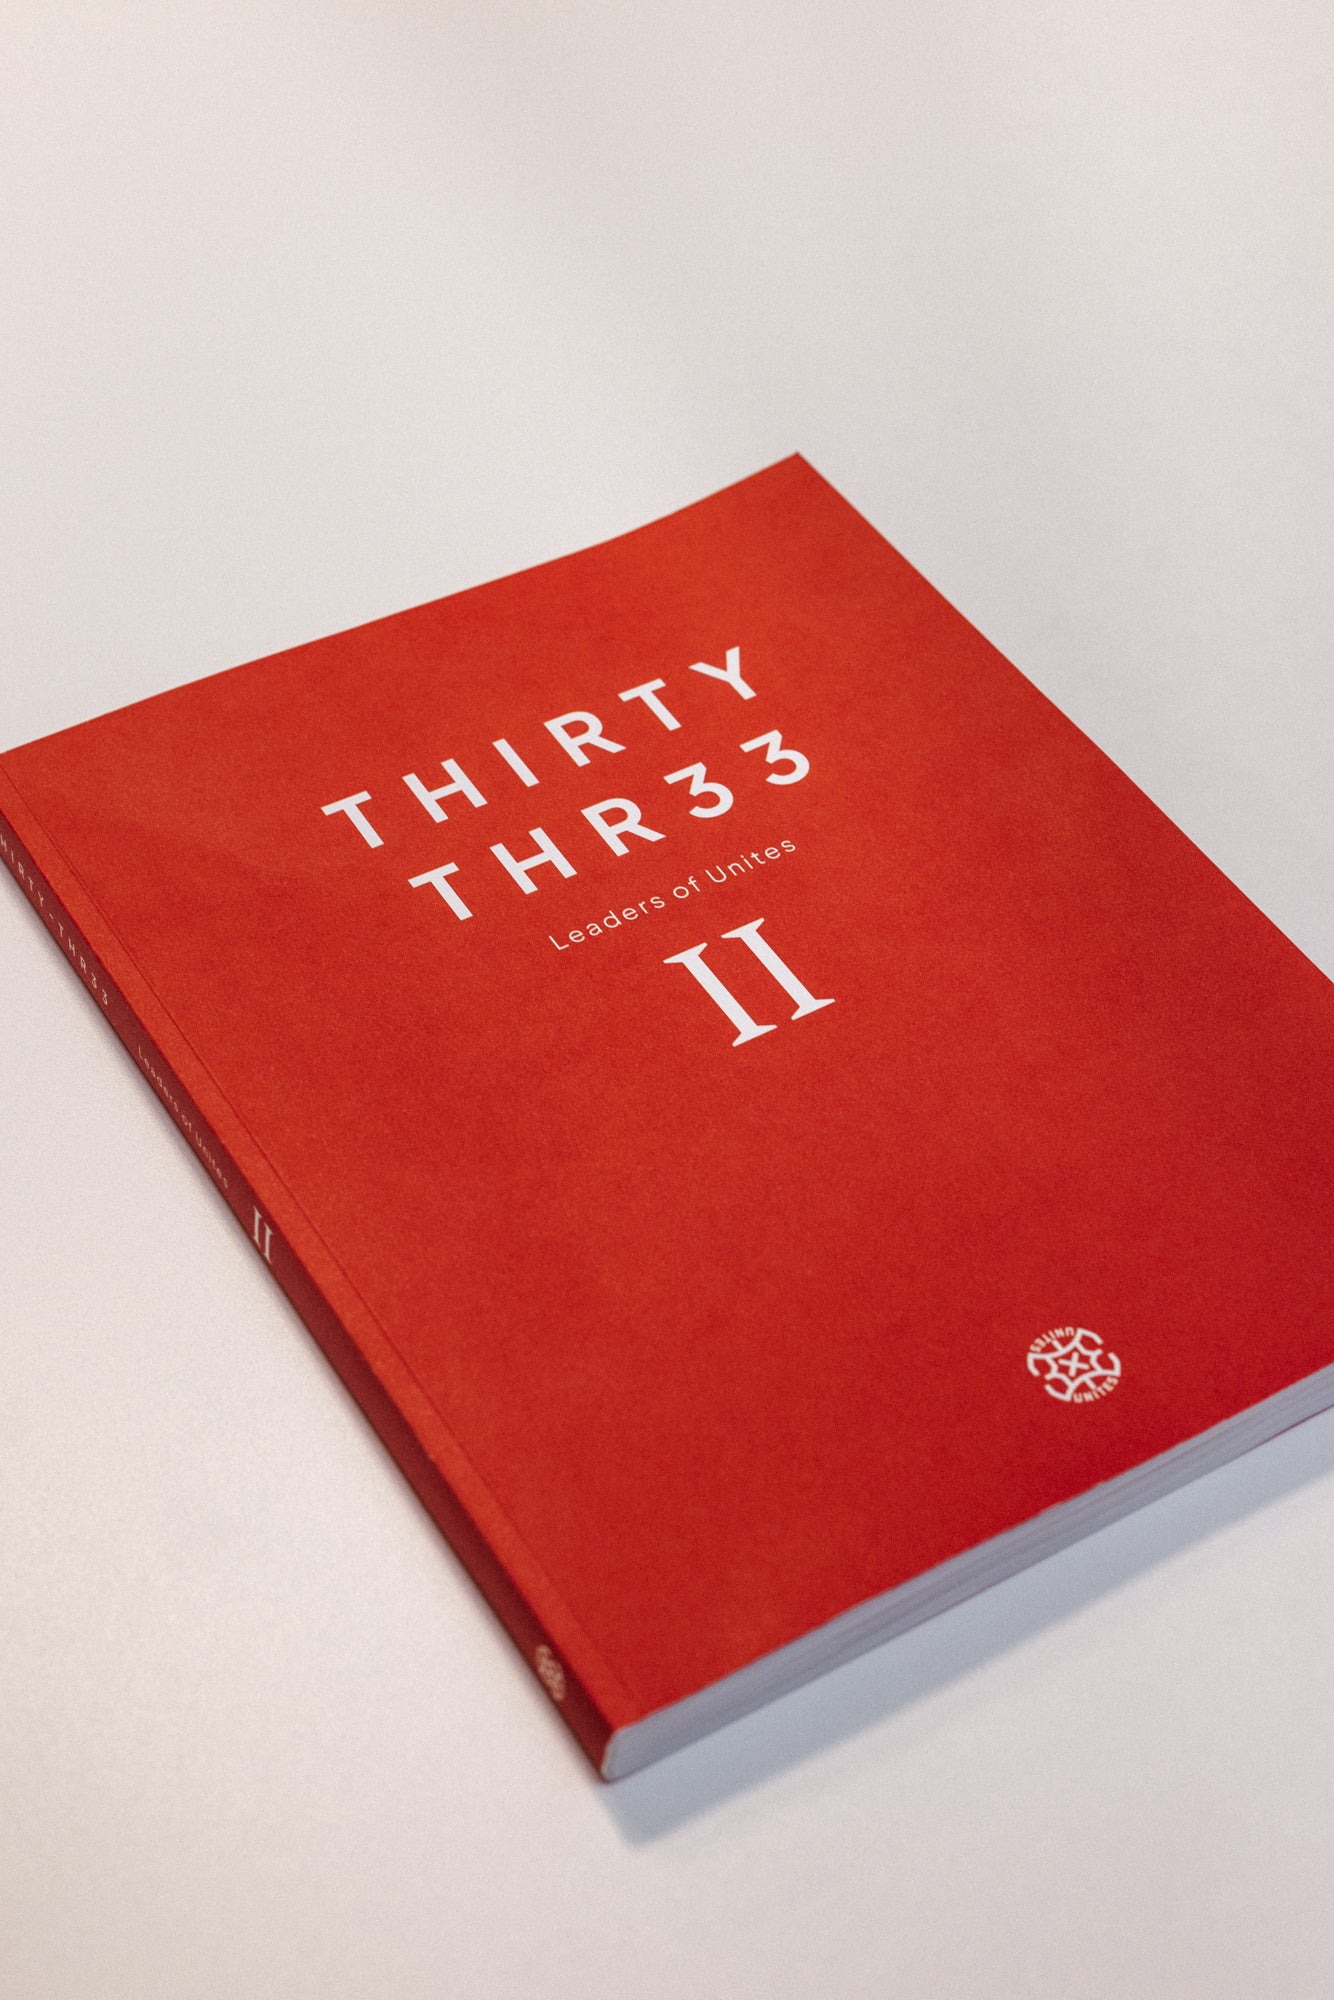 Leaders of Unites Thirty Thr33 - Vol II